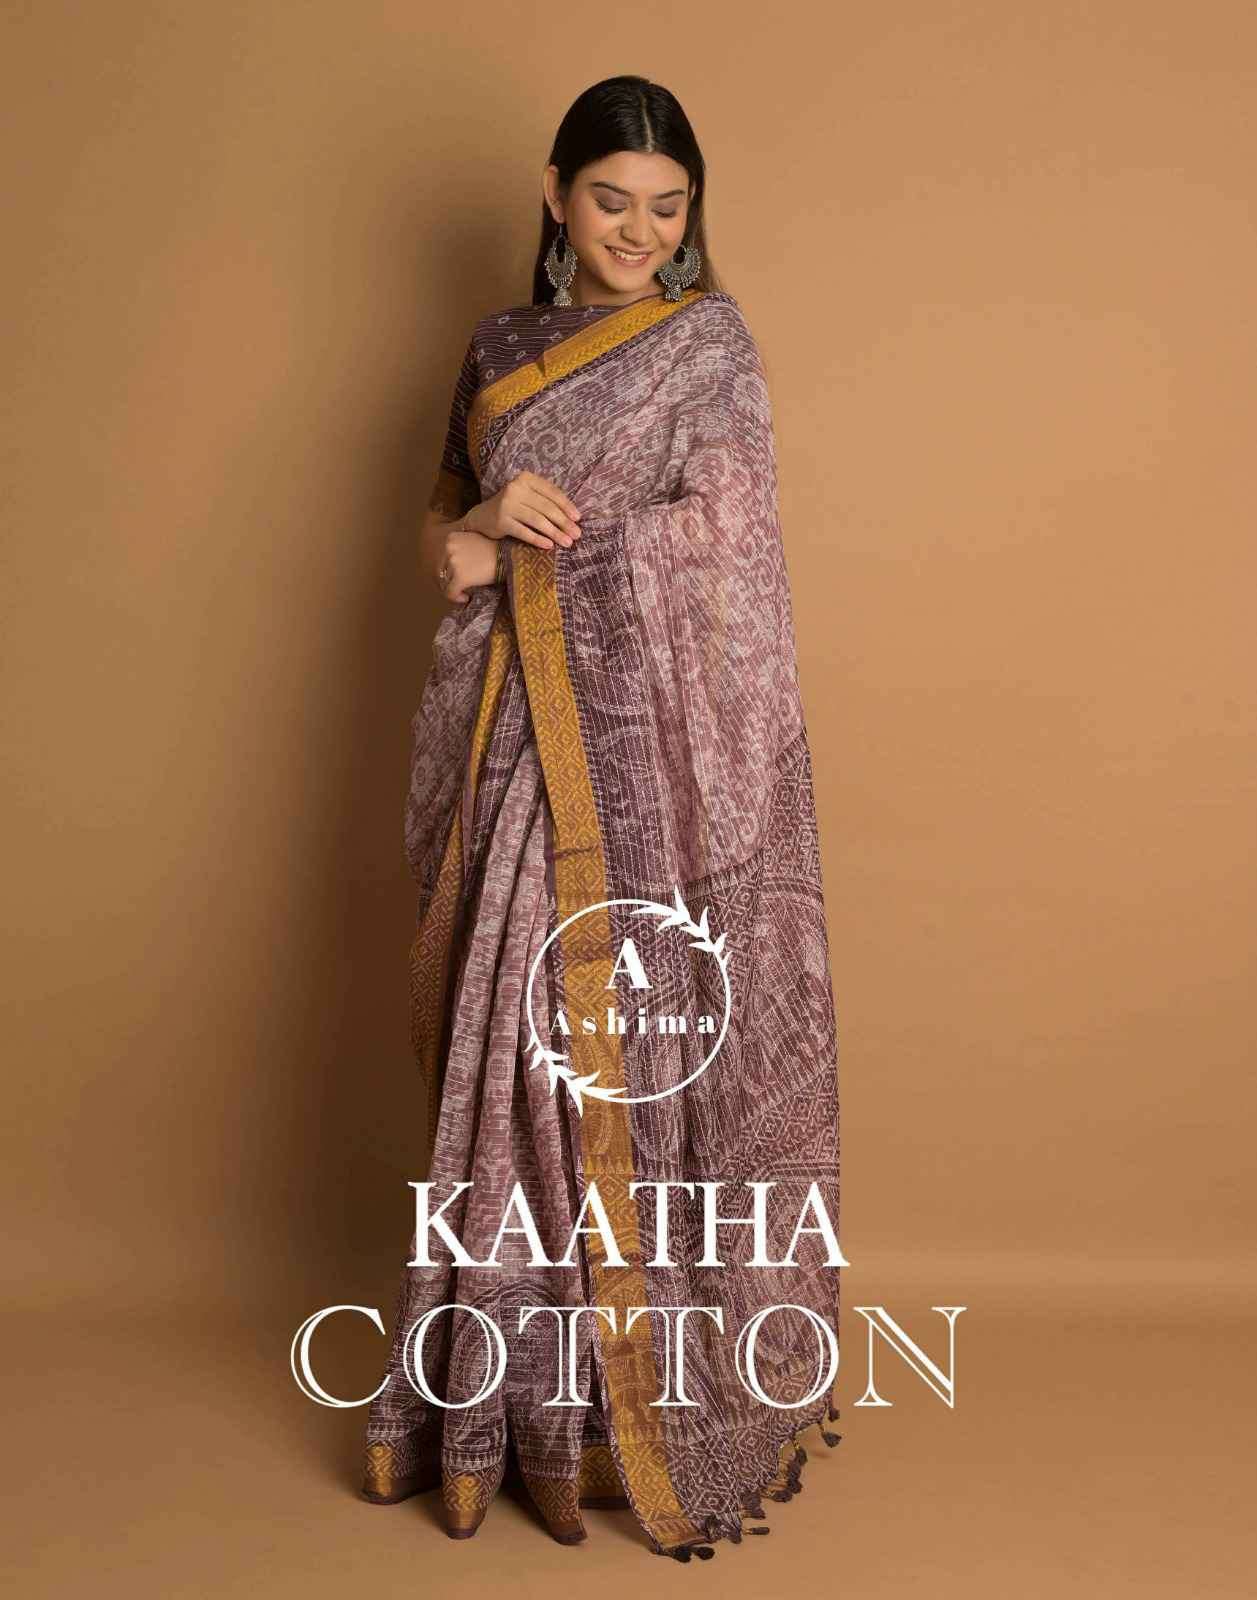 Ashima Kaatha Cotton Fancy Printed Exclusive Summer Wear Saree Wholesaler